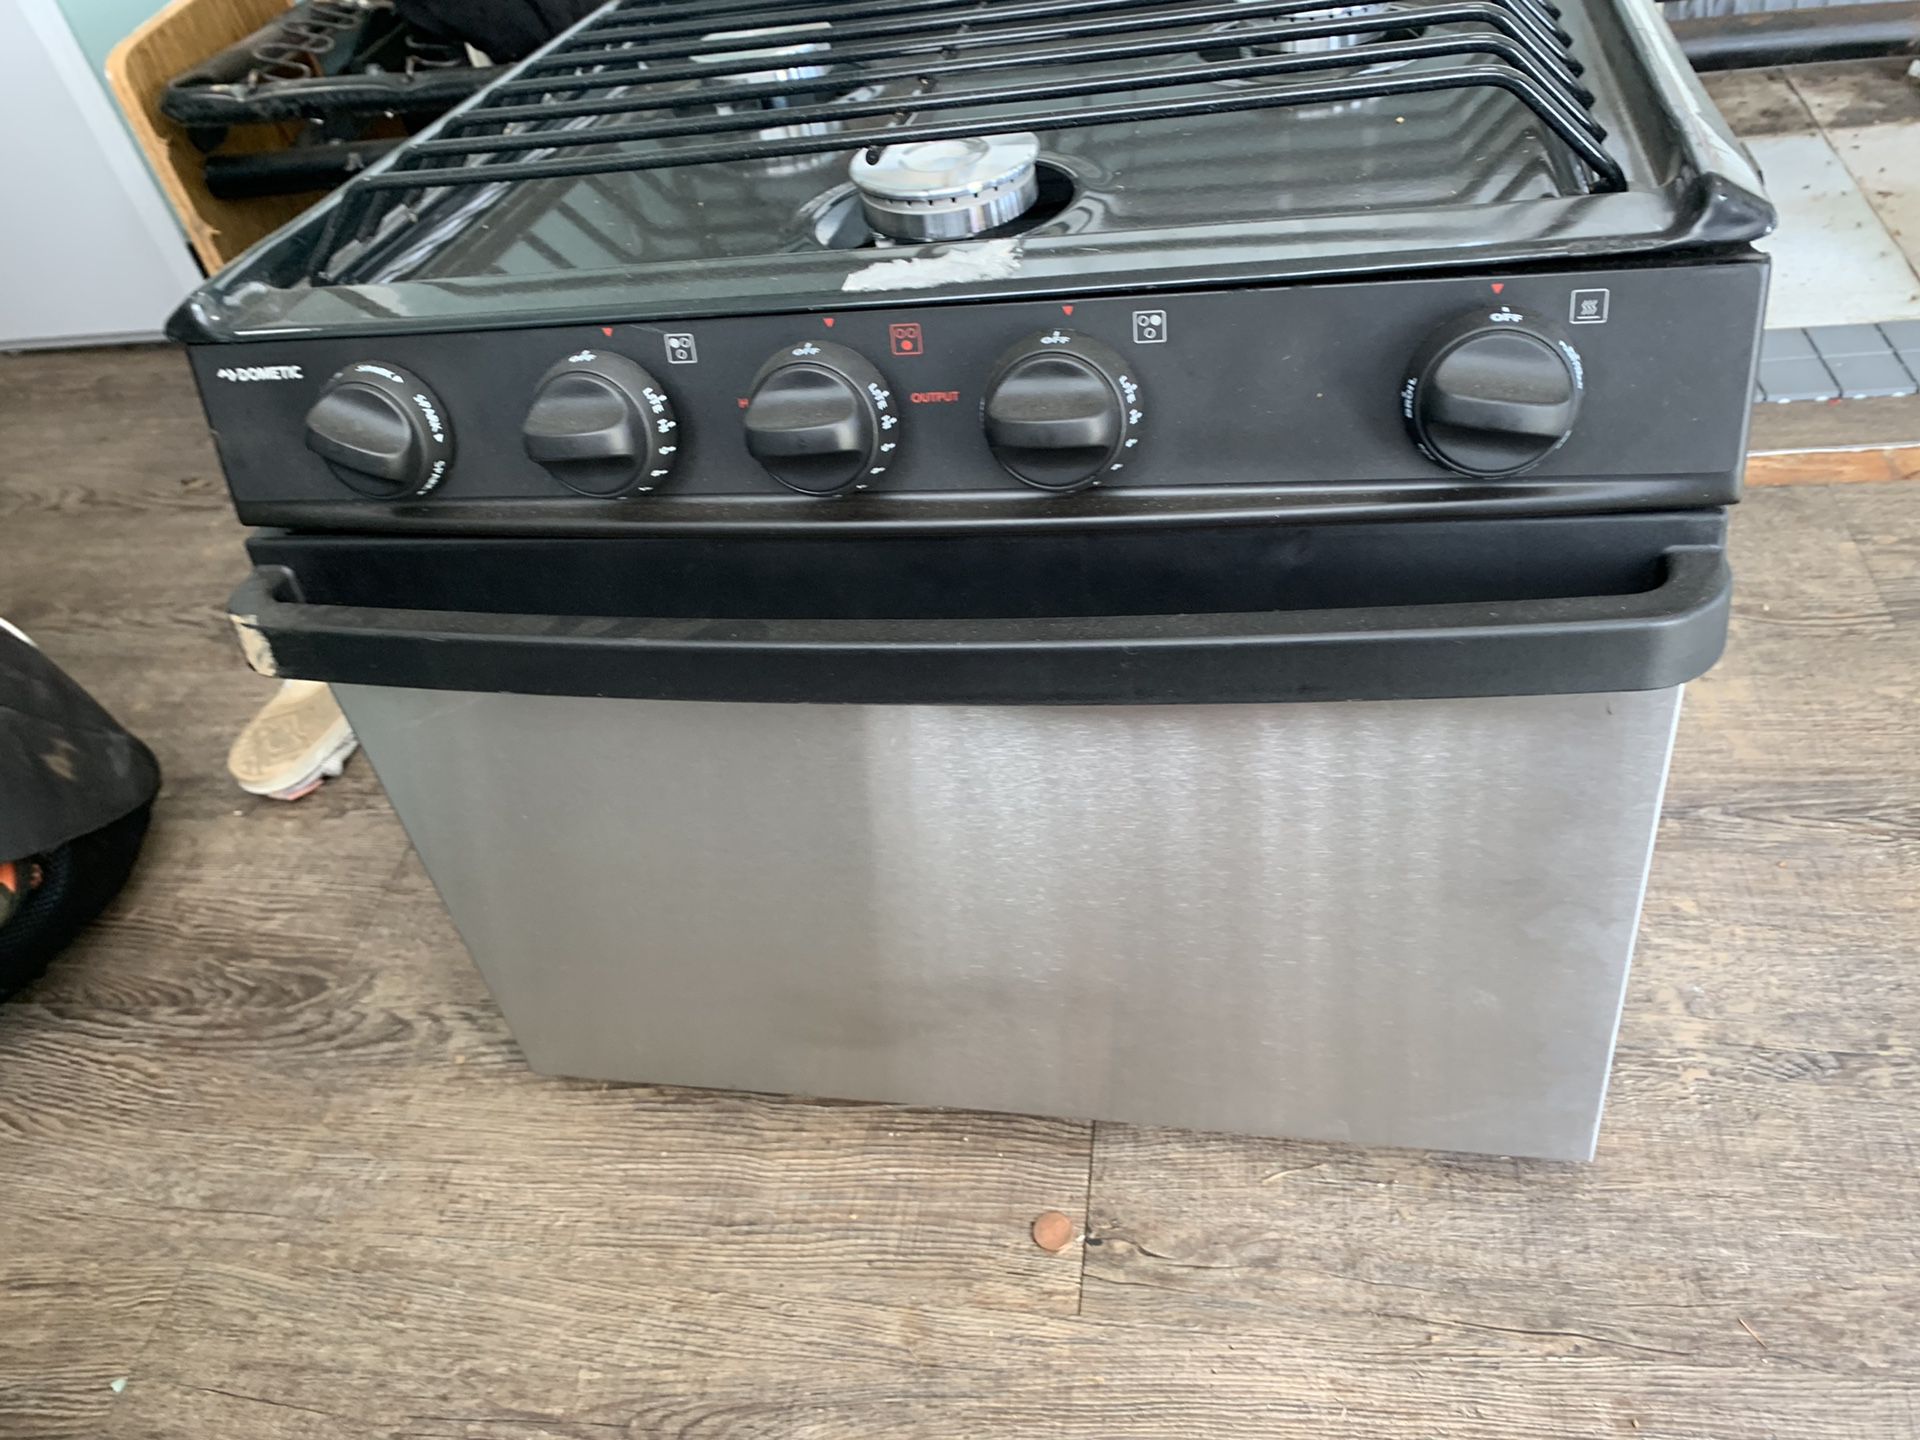 Dometic 3 burner camper stove/oven